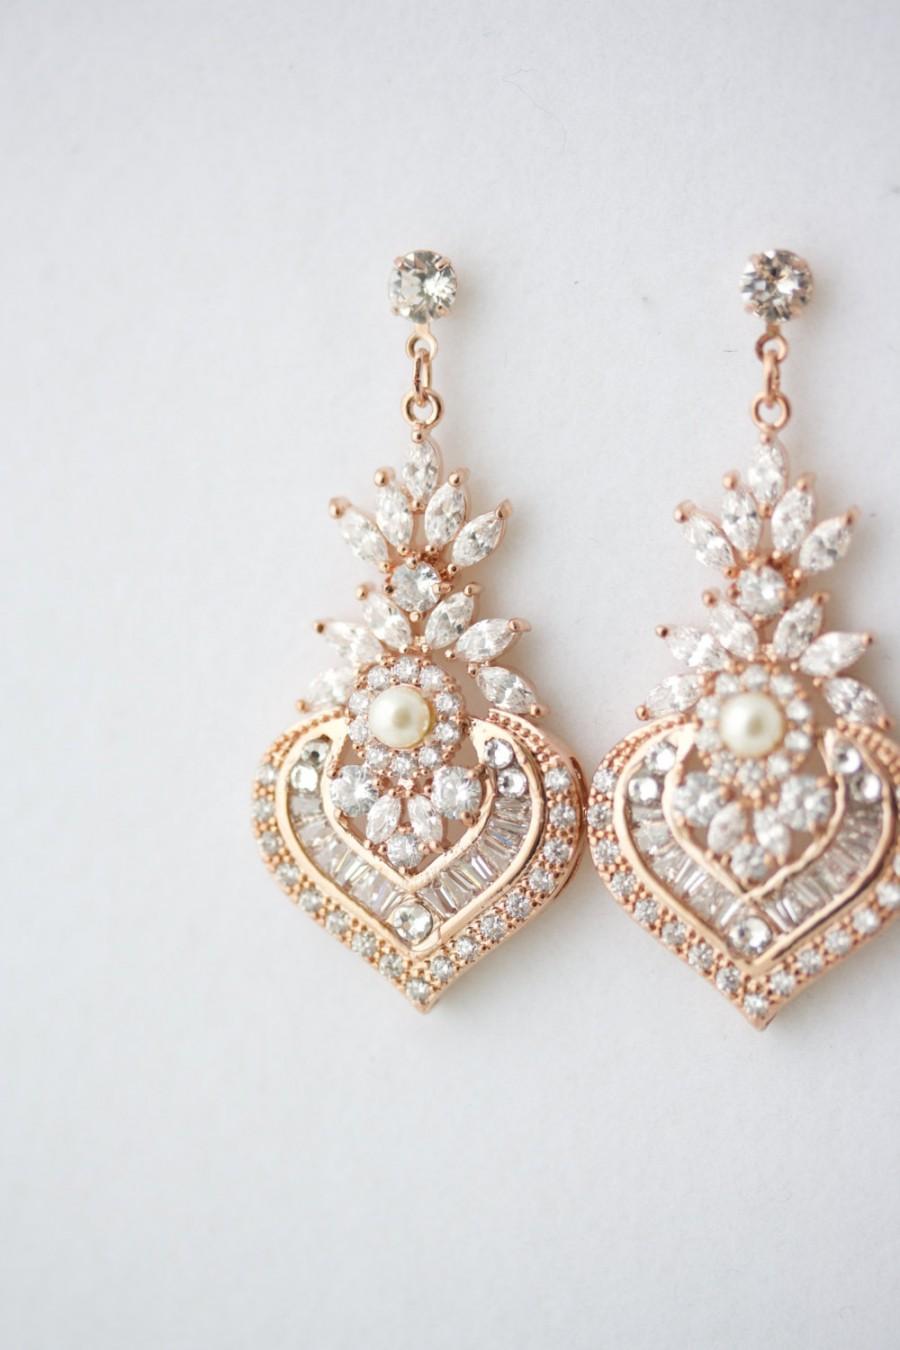 Mariage - Rose Gold Earrings Bridal Earrings Rose Gold Crystal Earrings Pearl Wedding Earrings Vintage Wedding Jewelry EVIE DROP